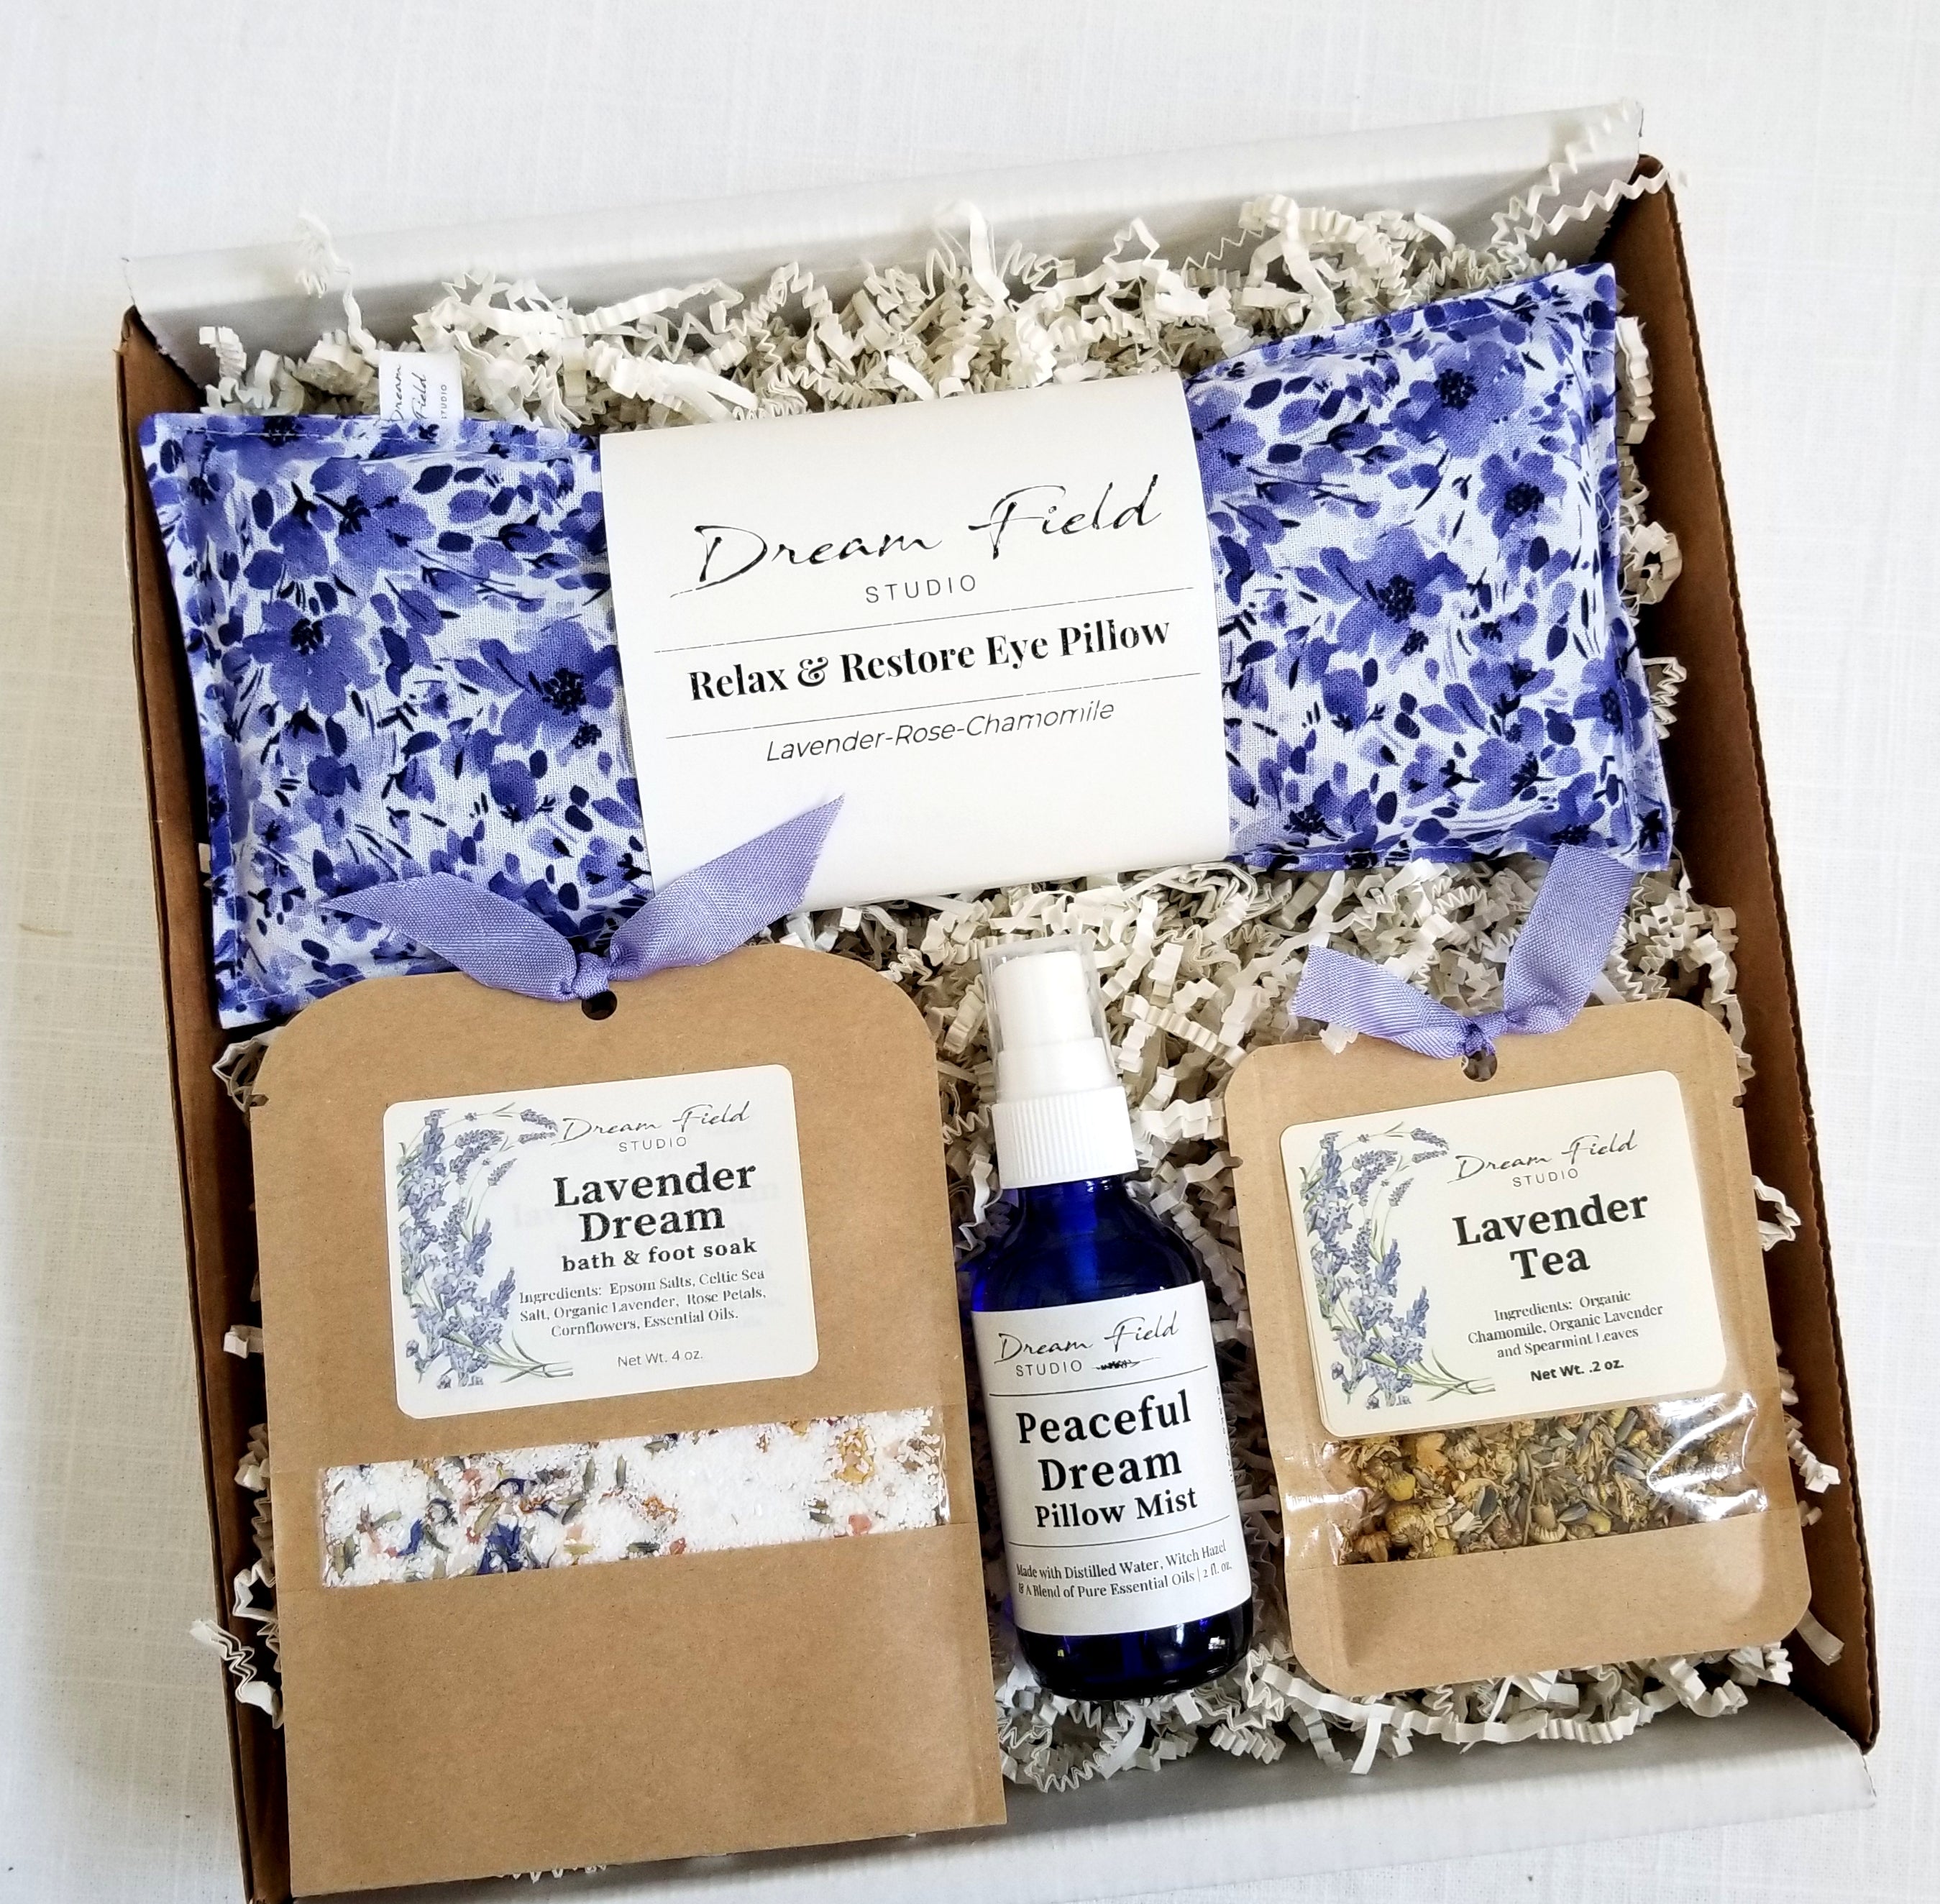 Violet floral gift box including Eye Pillow, bath & foot soak, pillow mist, tea